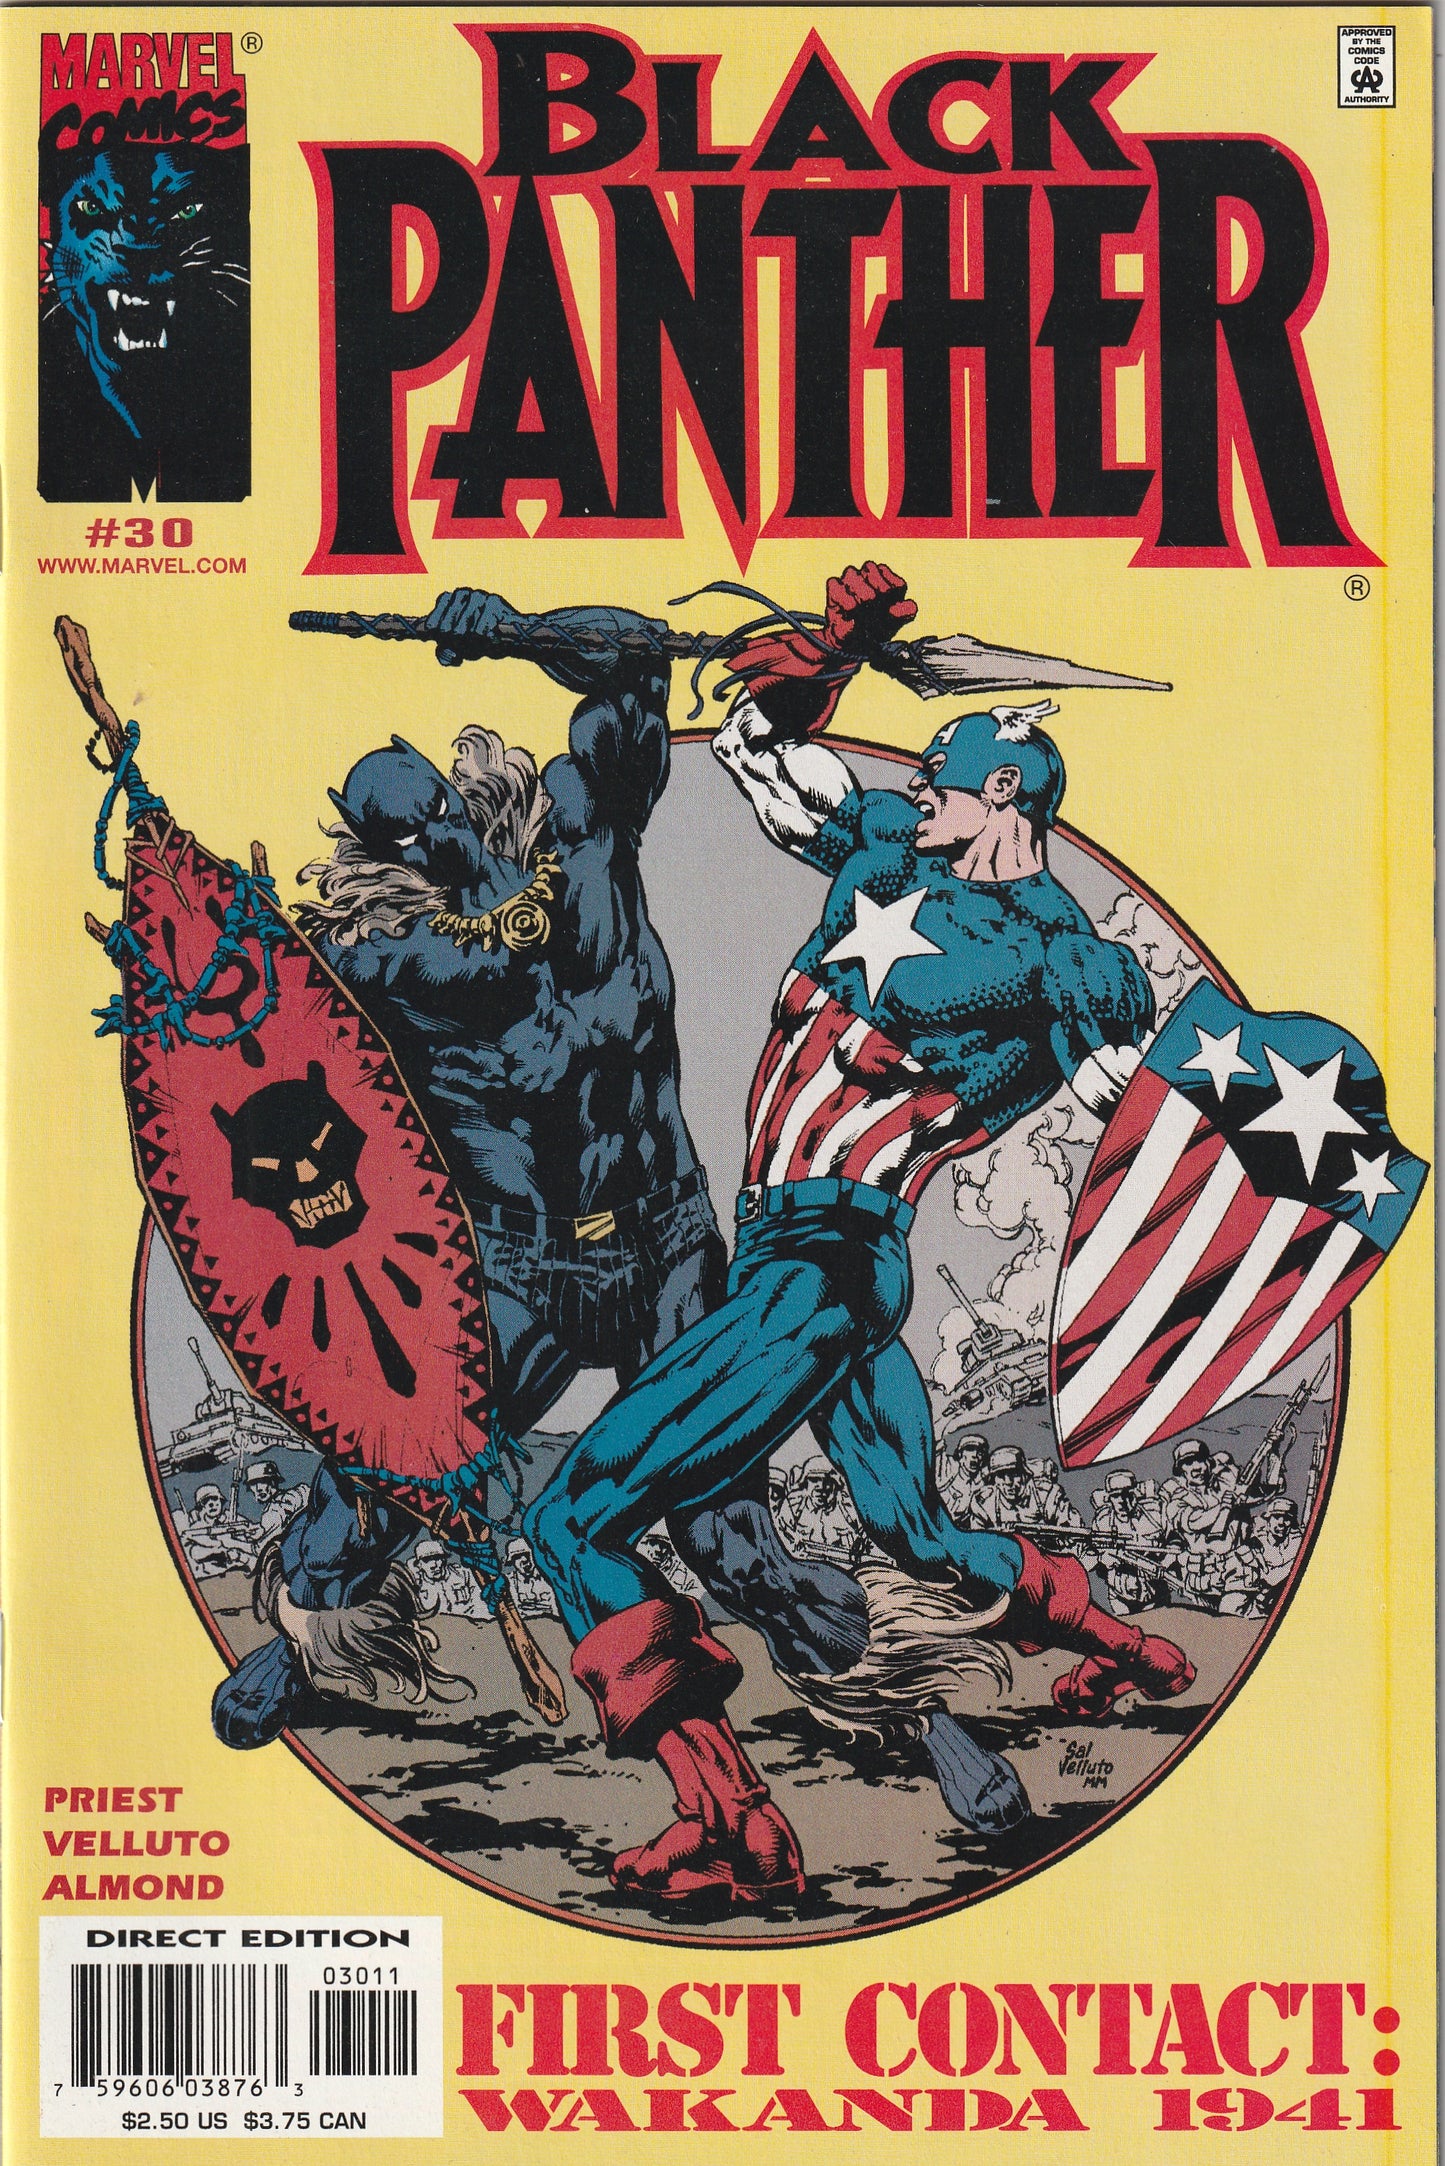 Black Panther #30 (2001) - Origin of Black Panther Meeting Captain America